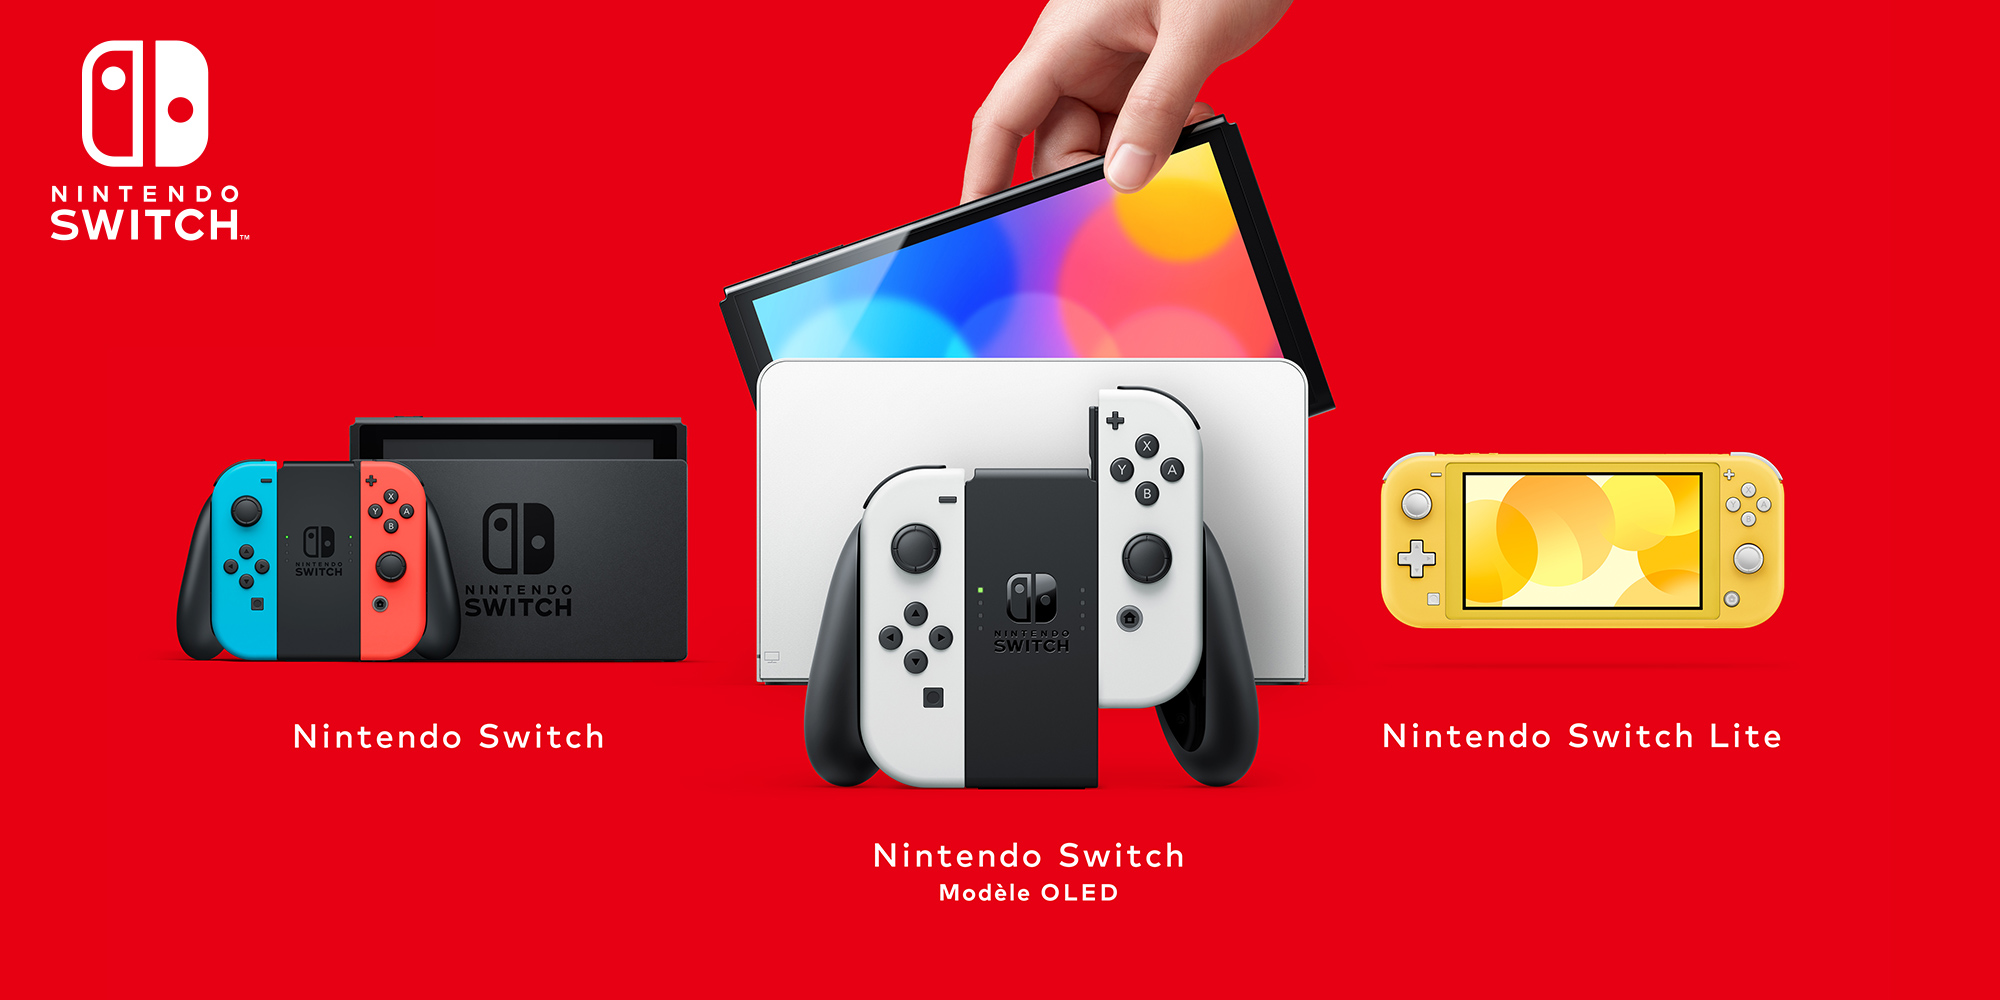 Reddit User Details Full List of Nintendo Switch Games Releasing in 2022 -  Gameranx